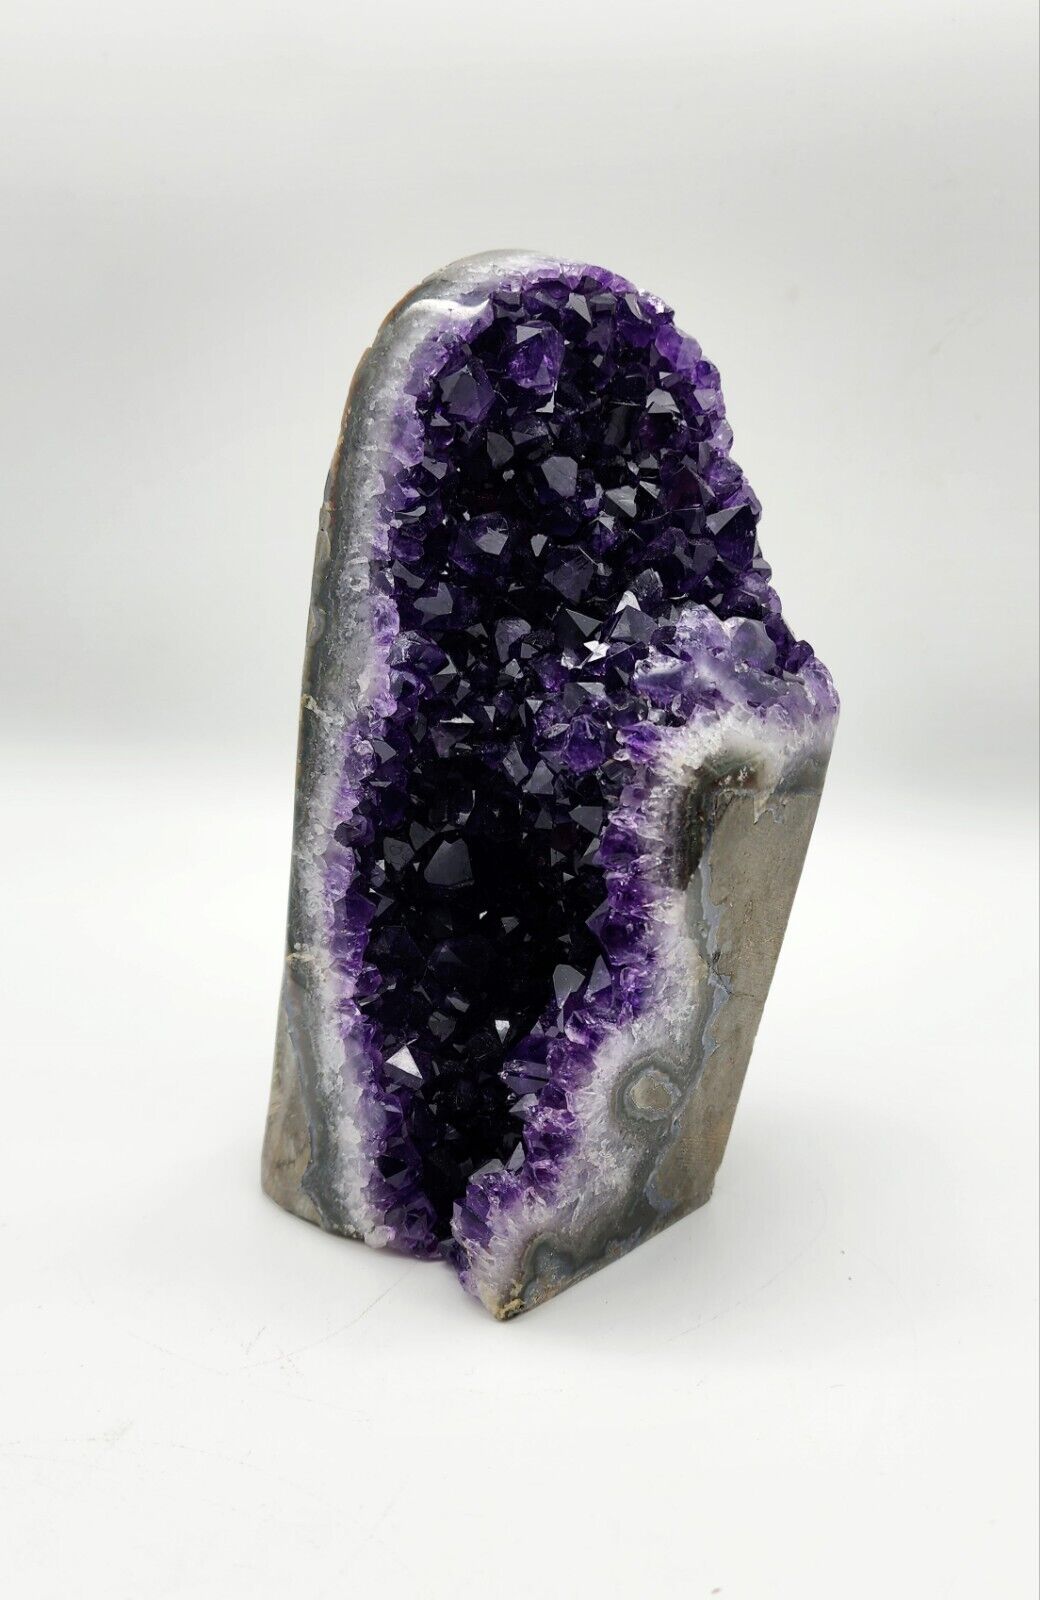 Amethyst Large Over 3 Pounds Geode Quartz Cluster, Uruguay Deep Purple Amethyst.